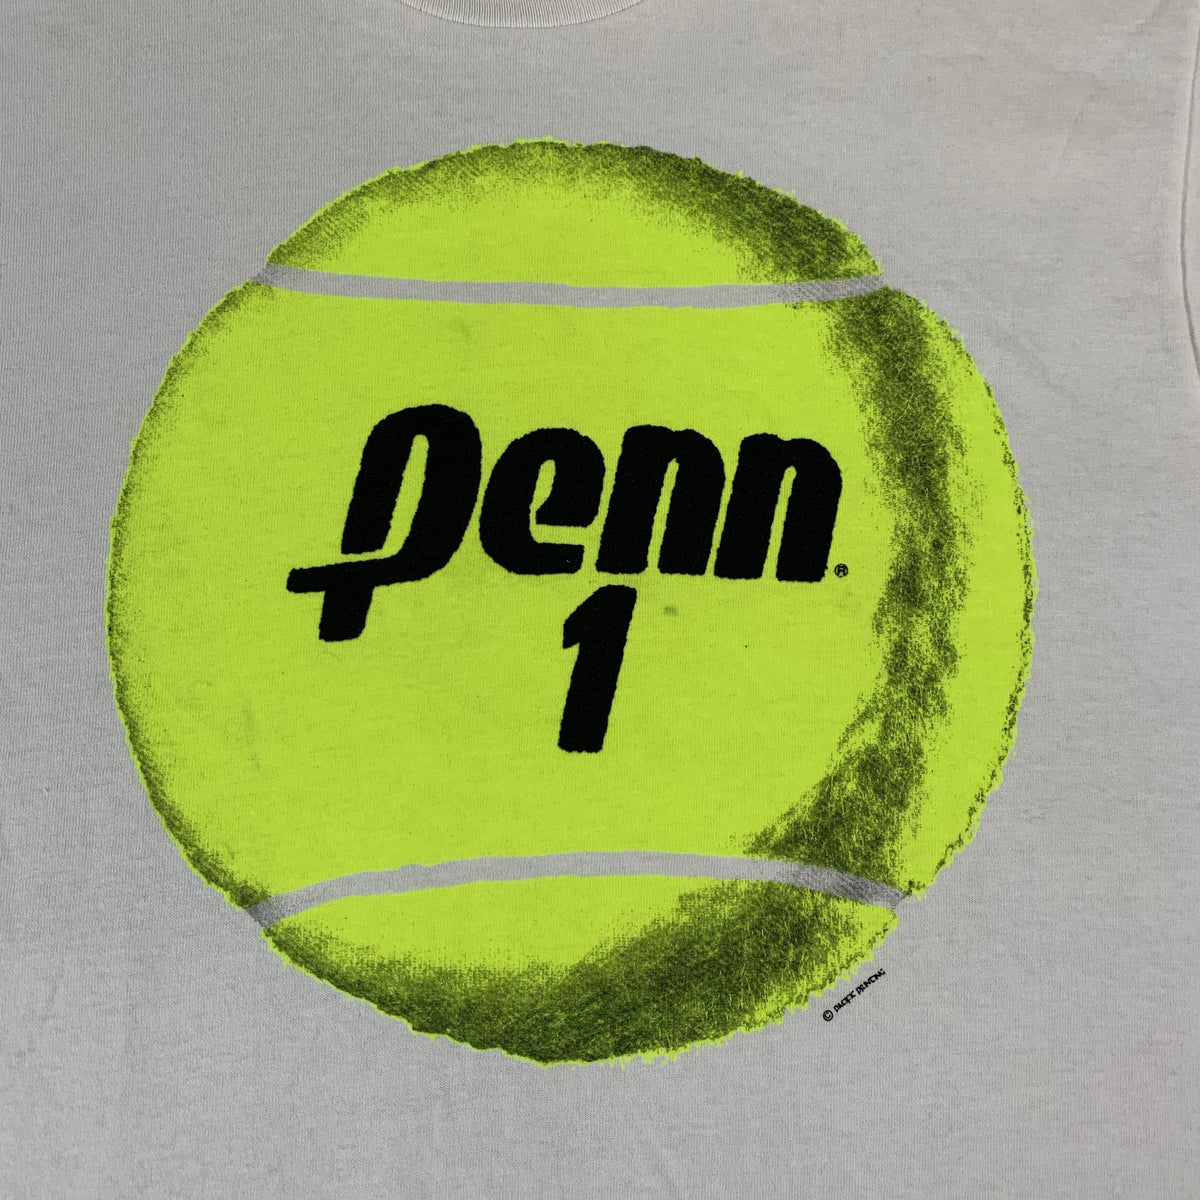 Vintage Penn “Tennis Ball” T-Shirt - jointcustodydc